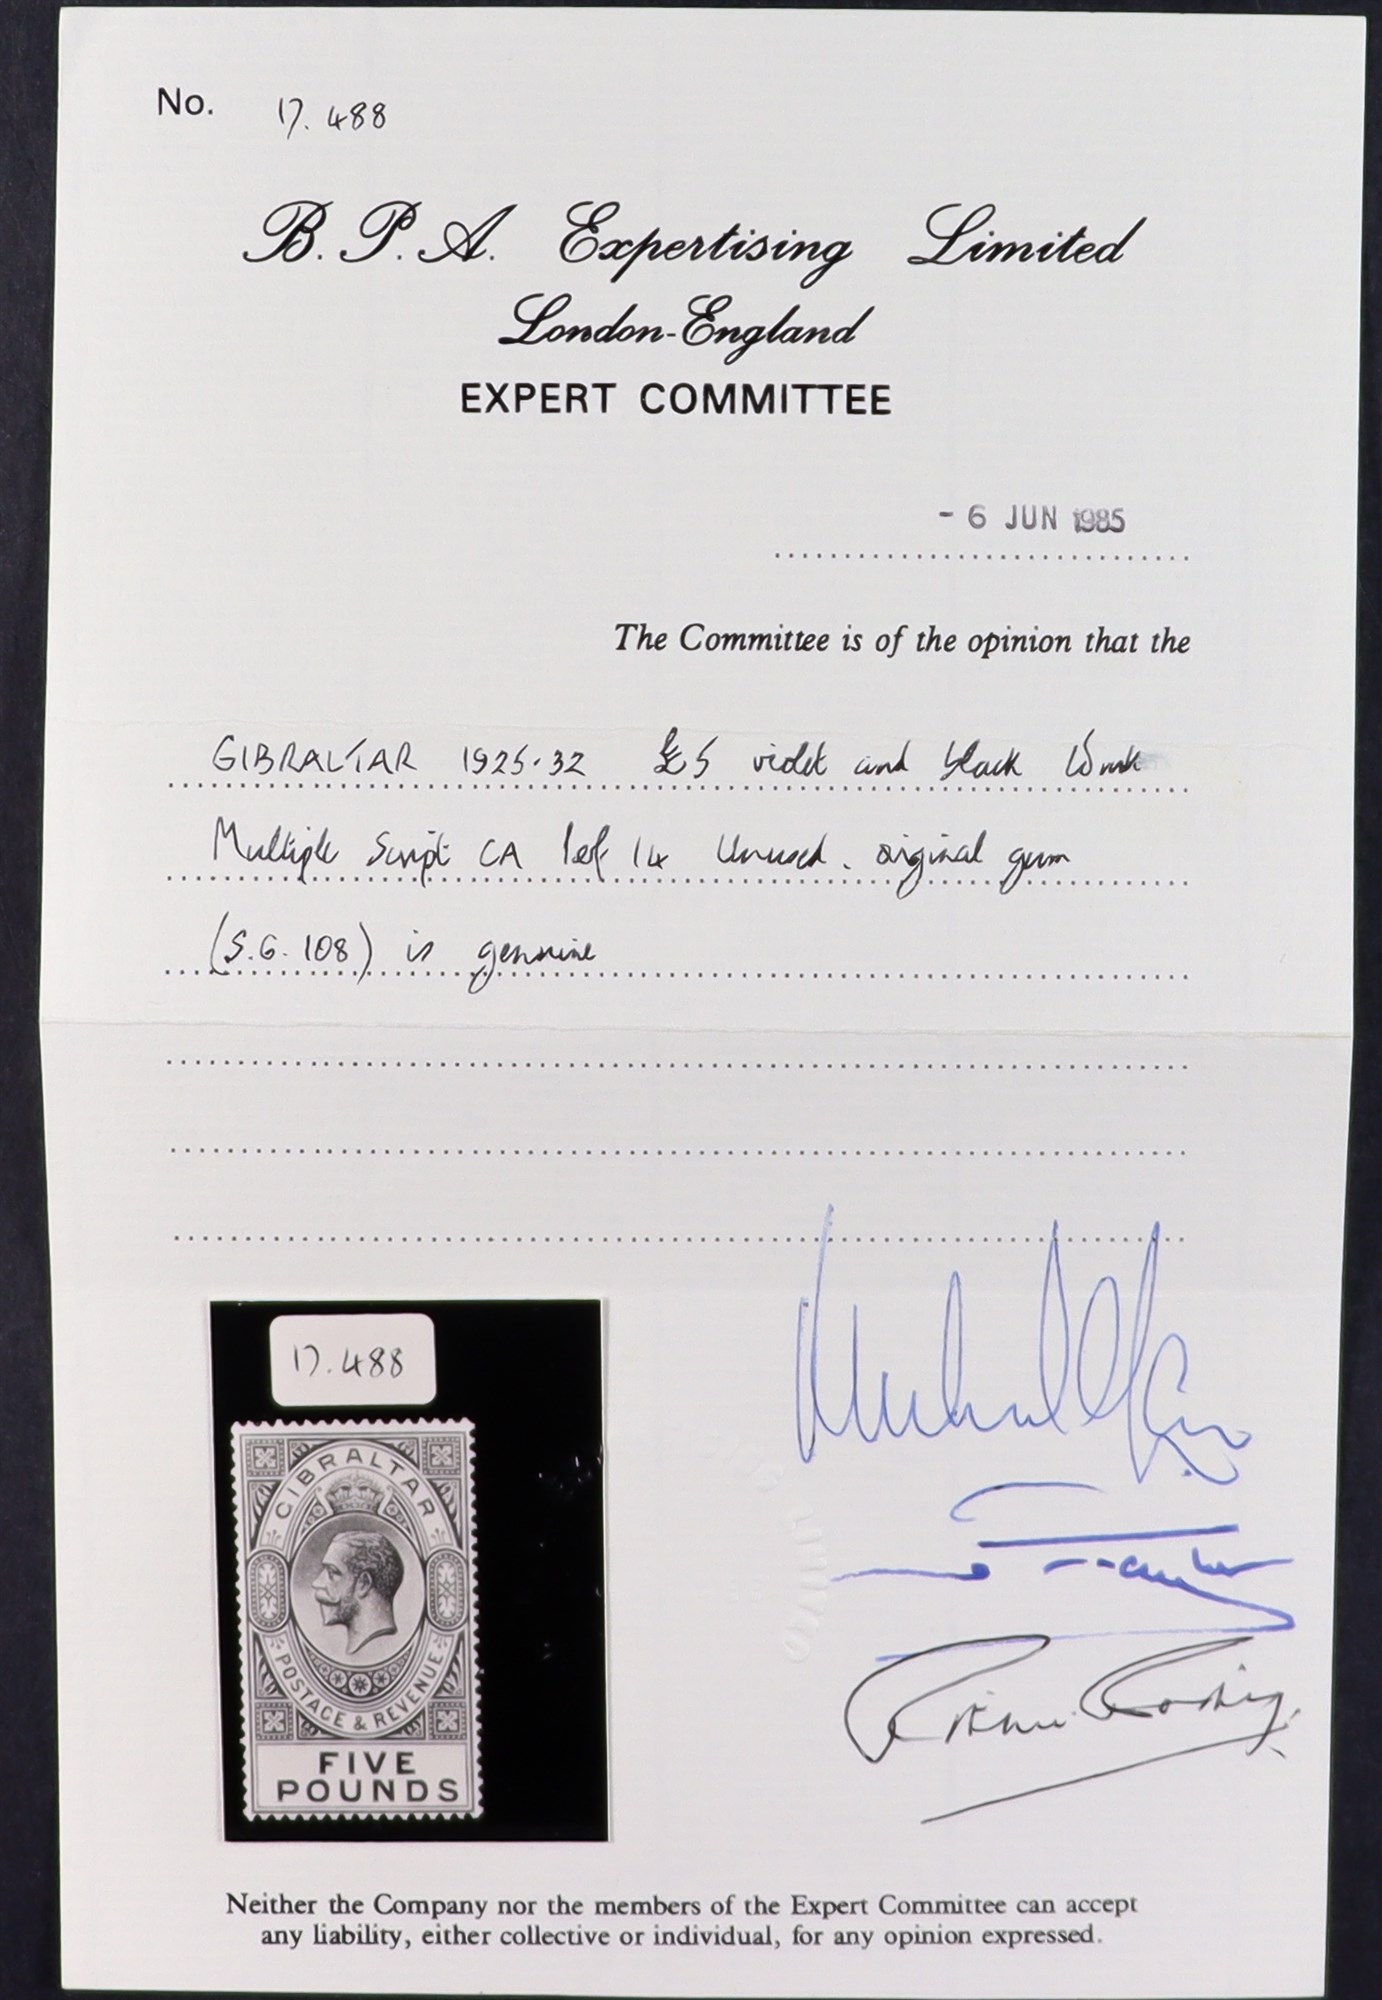 GIBRALTAR 1925-32 £5 violet and black, SG 108, never hinged mint, BPA certificate. Cat £1600. - Image 2 of 2